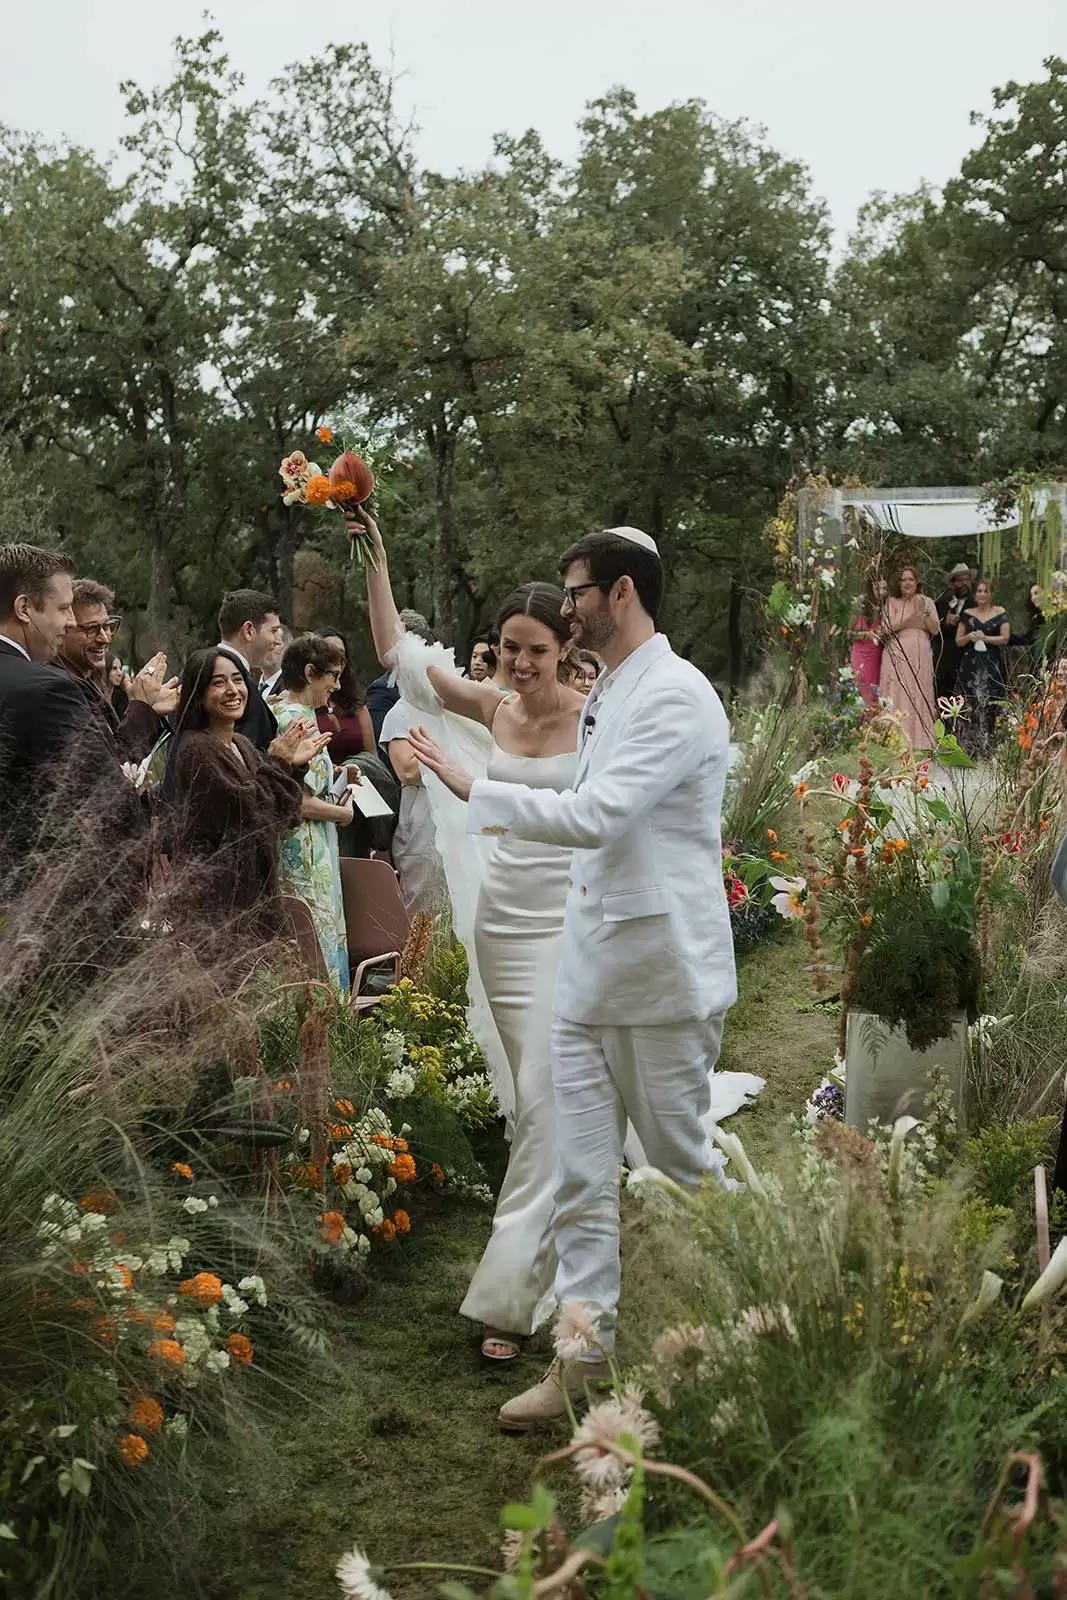 The Grand Woman Austin Backyard Marriage ceremony